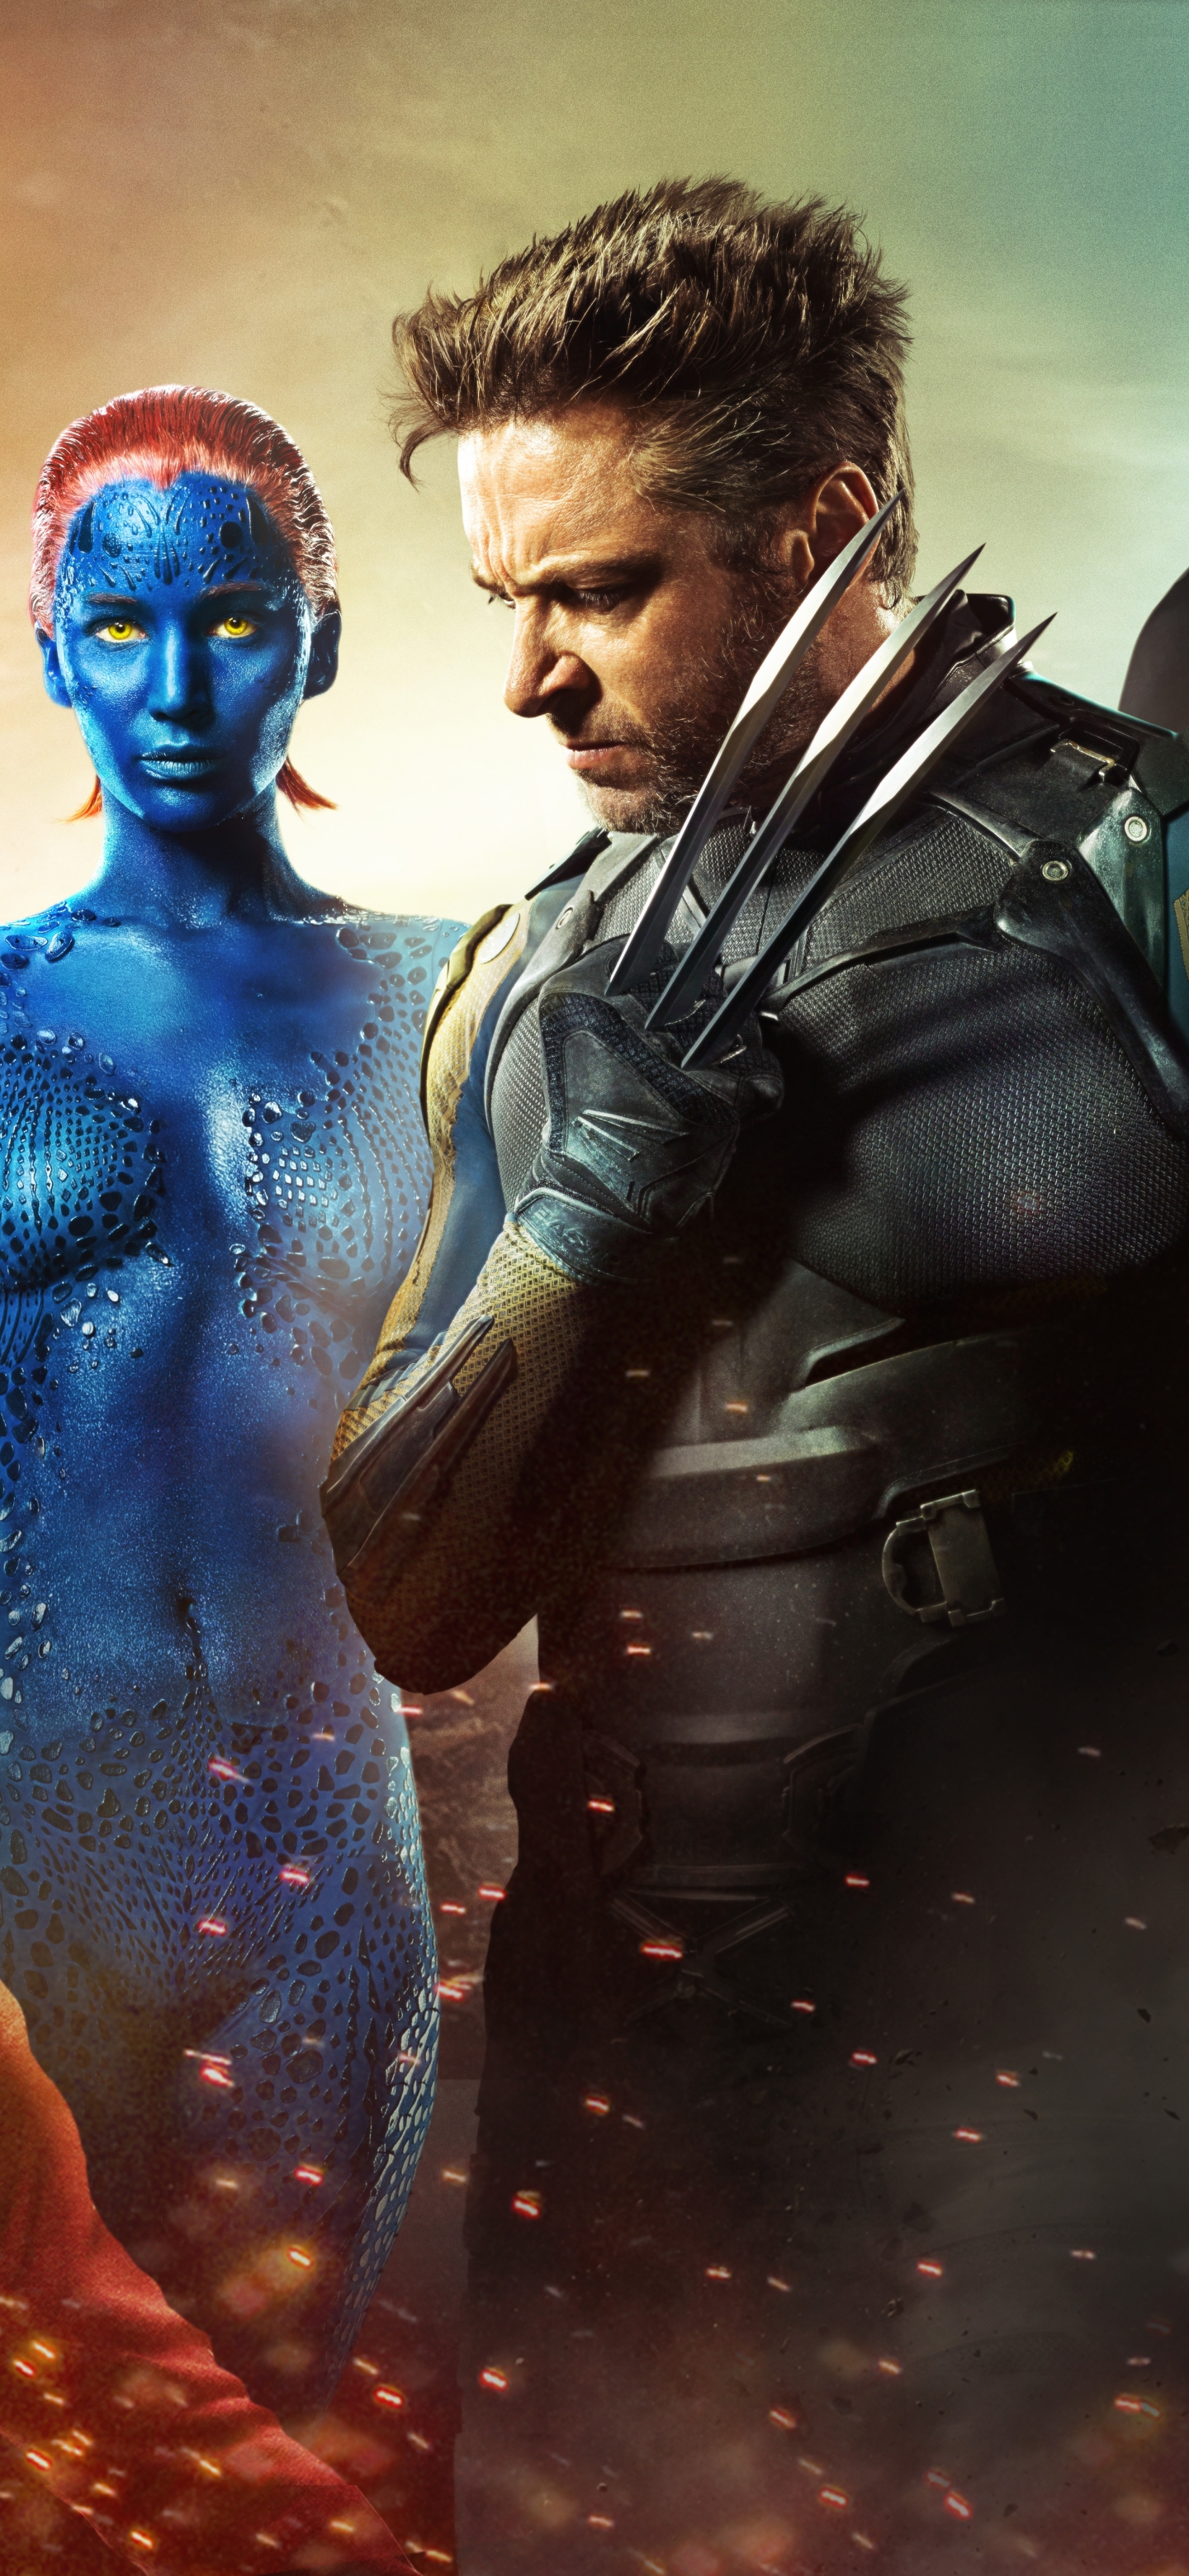 Descarga gratuita de fondo de pantalla para móvil de X Men, Glotón, Películas, Mística (Marvel Comics), Logan James Howlett, X Men: Días Del Futuro Pasado.